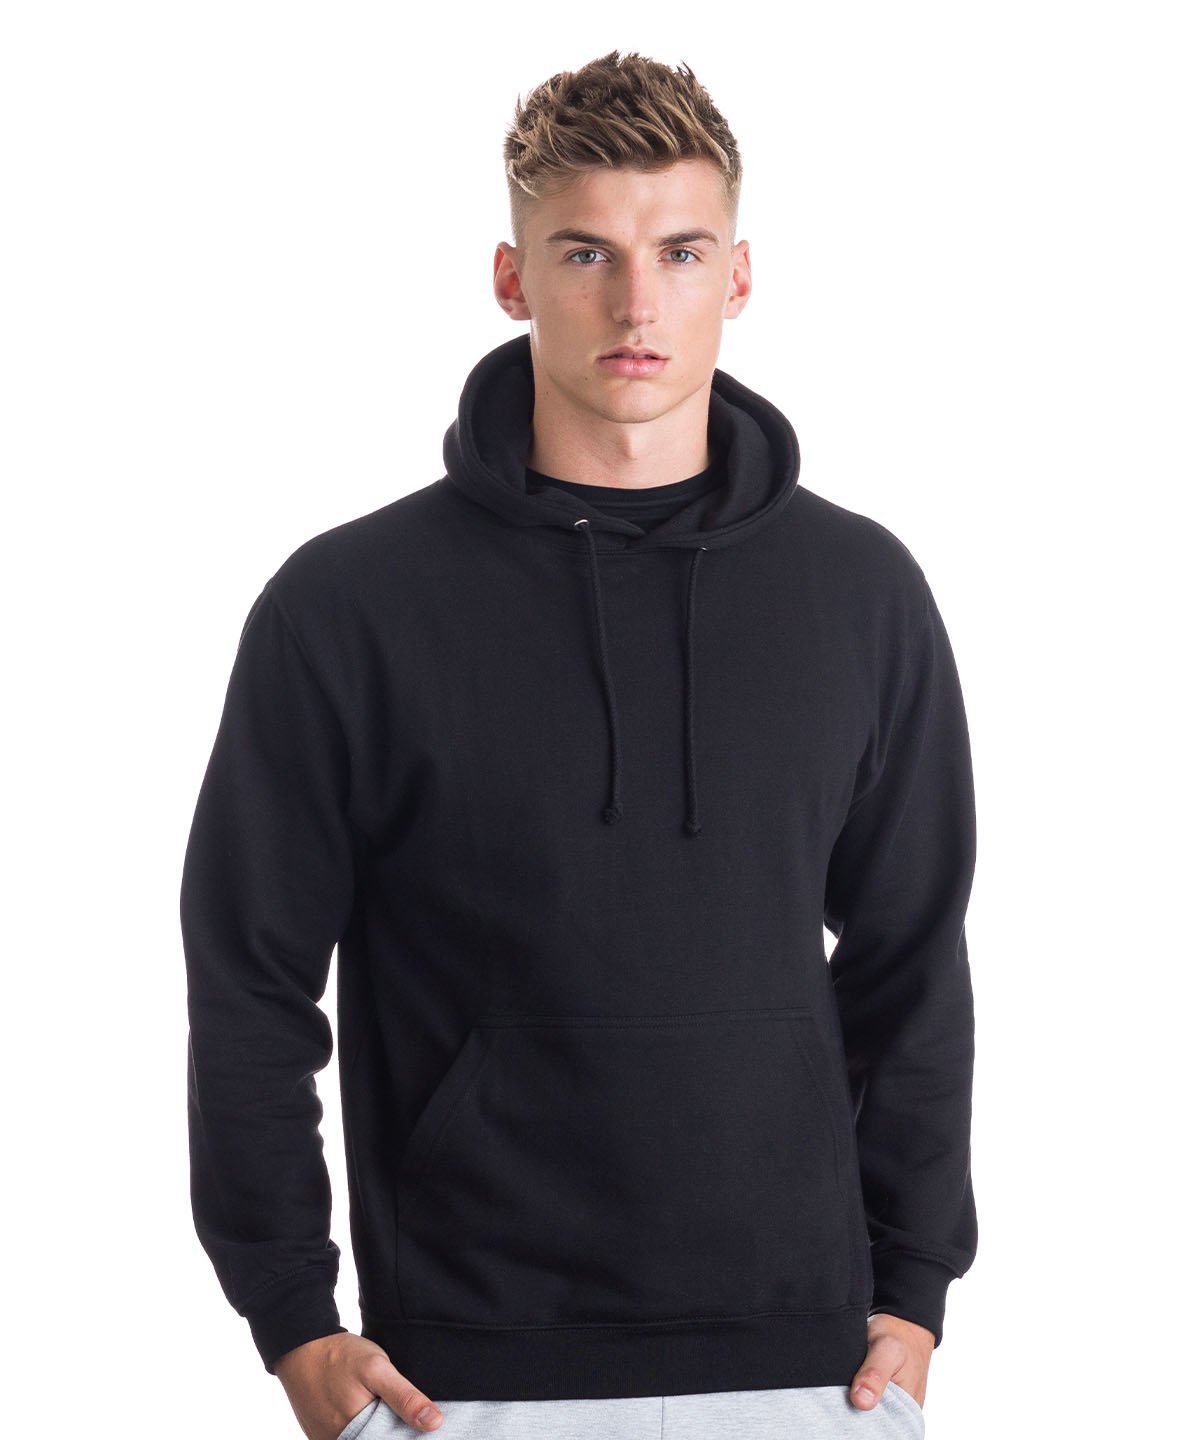 College hoodie | Huk Group Nuneaton